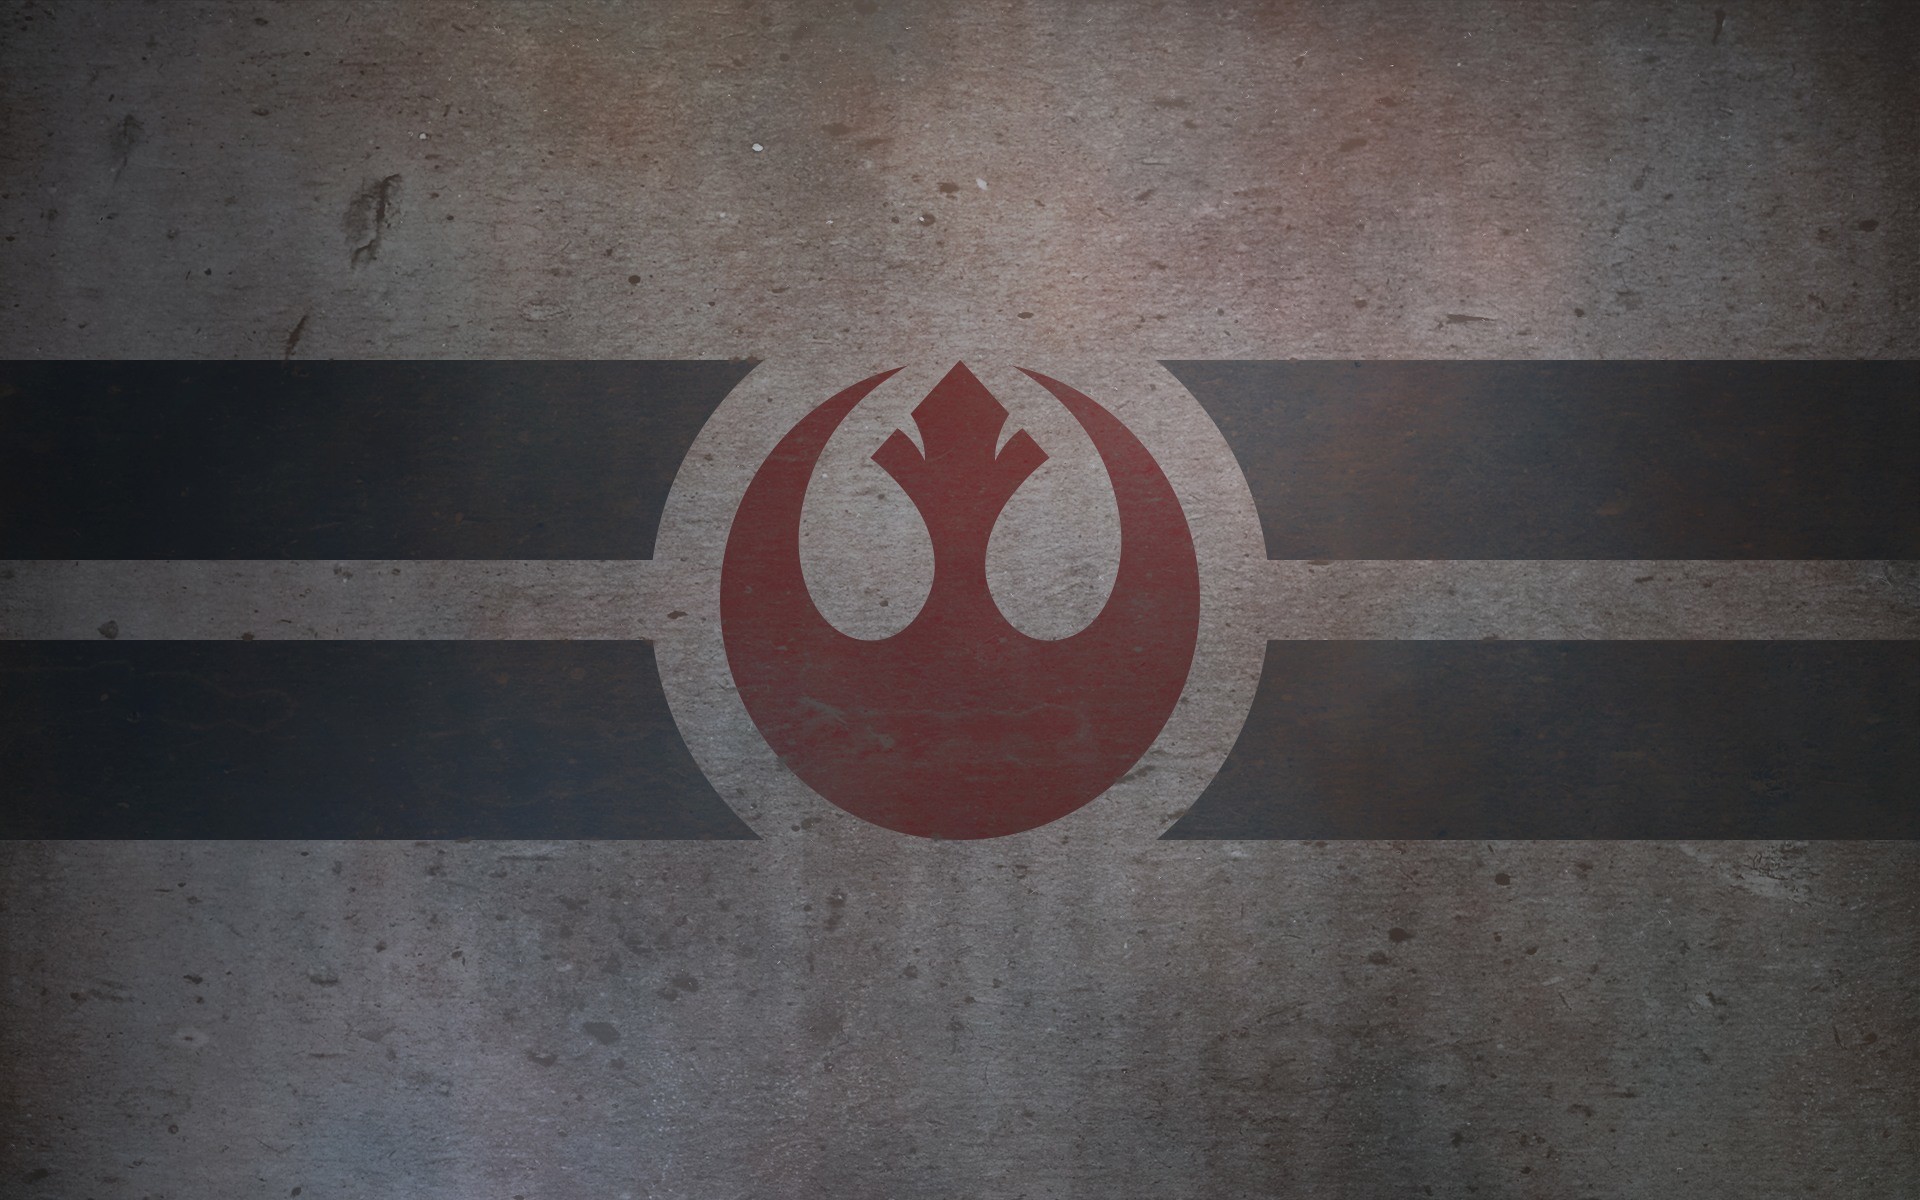 Star Wars – Rebel Alliance desktop wallpaper